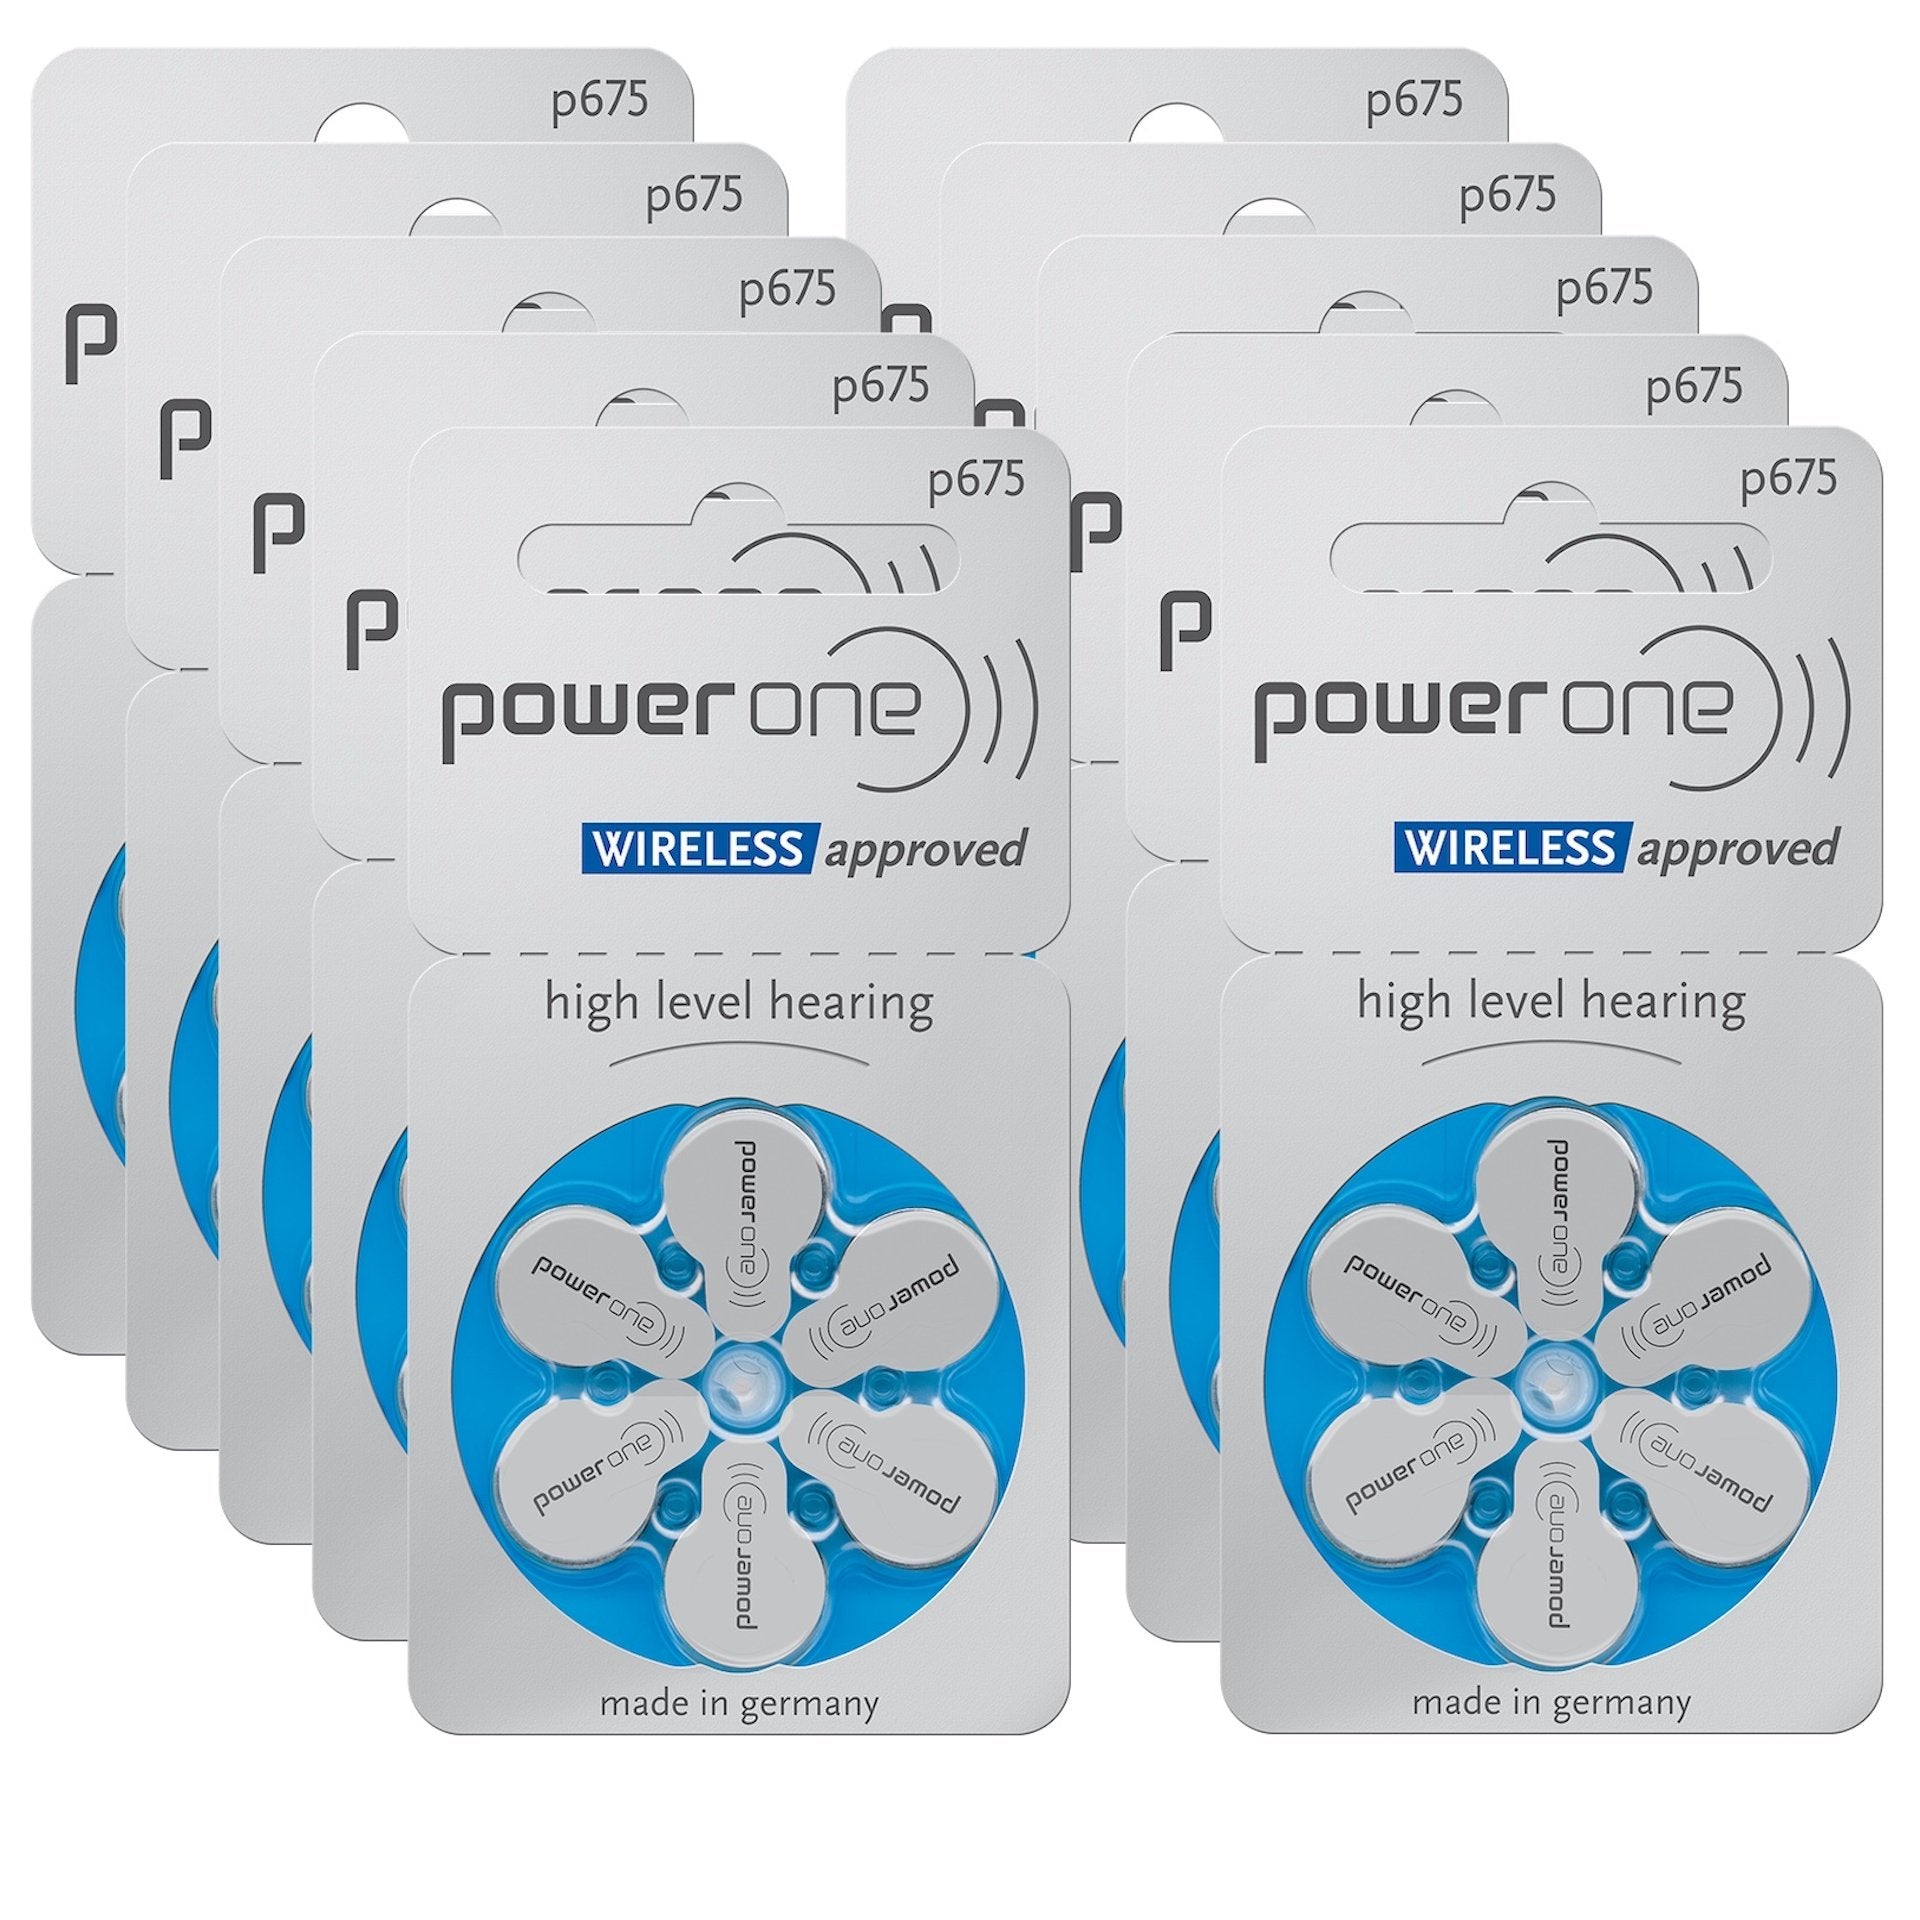 Powerone 675 Hörgerätebatterien (60er Pack) - Hörgeräte Direkt